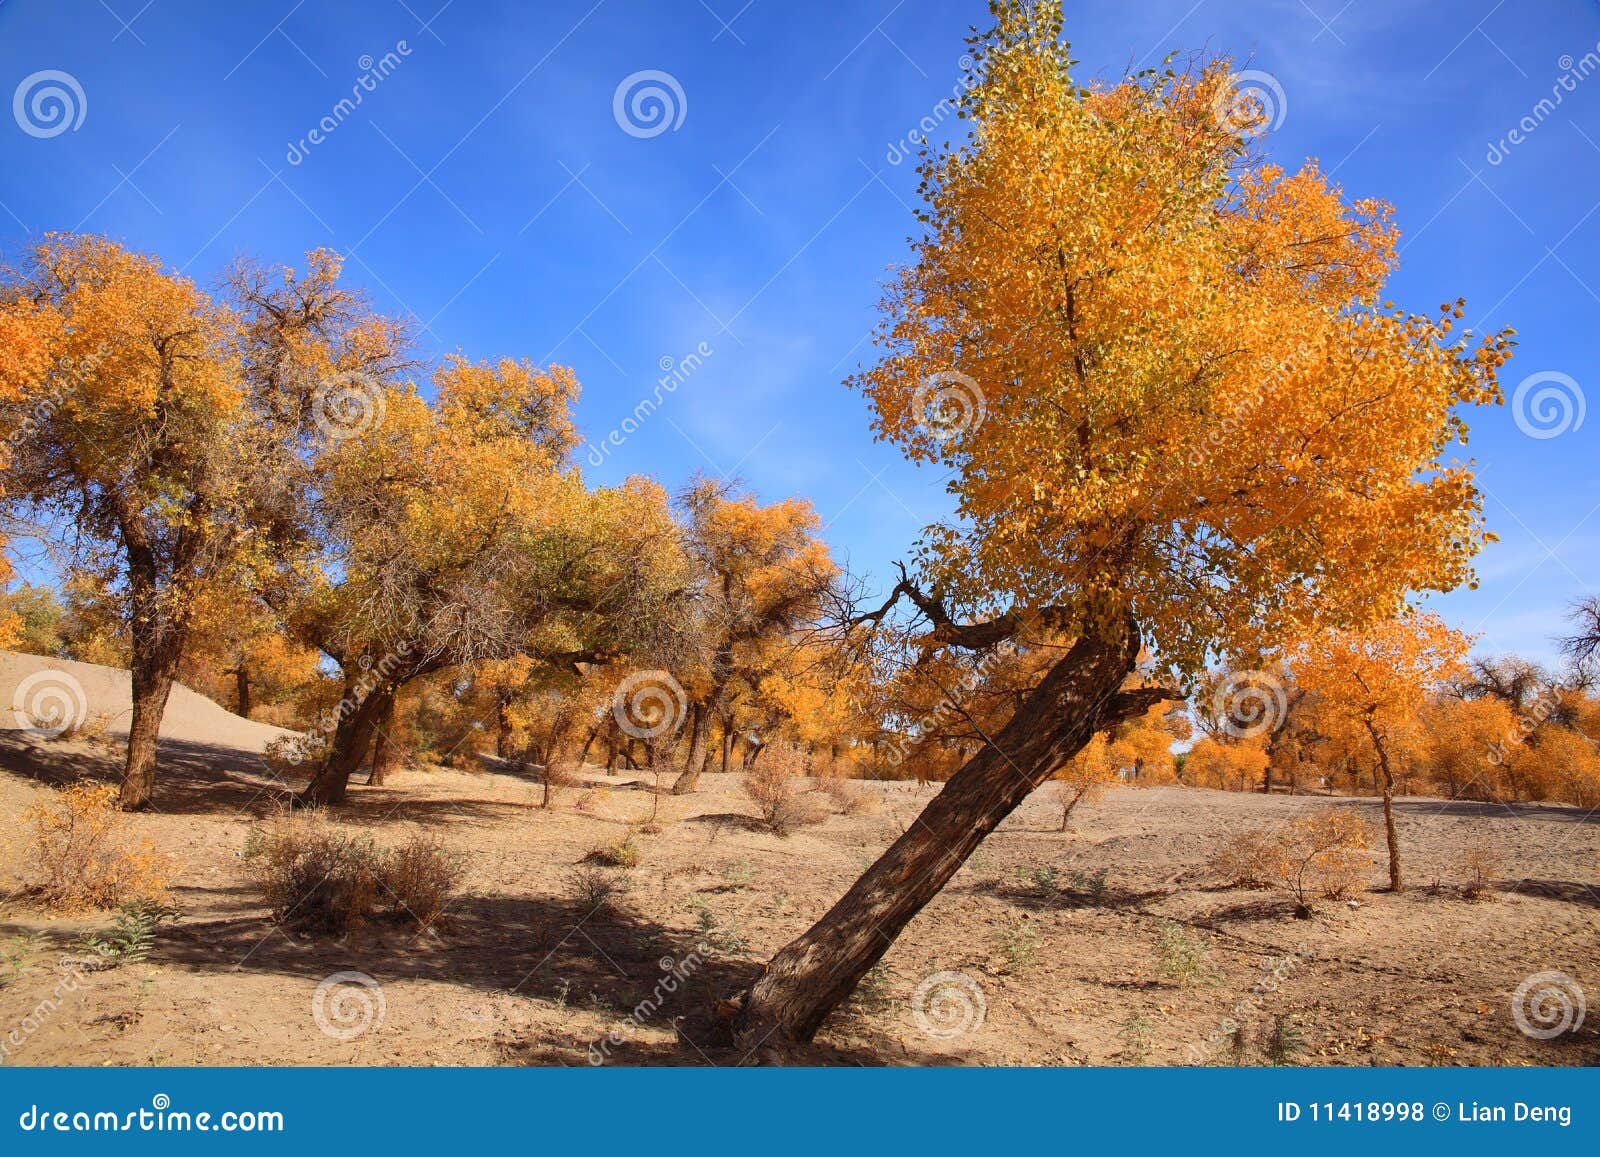 golden black poplars in autumn